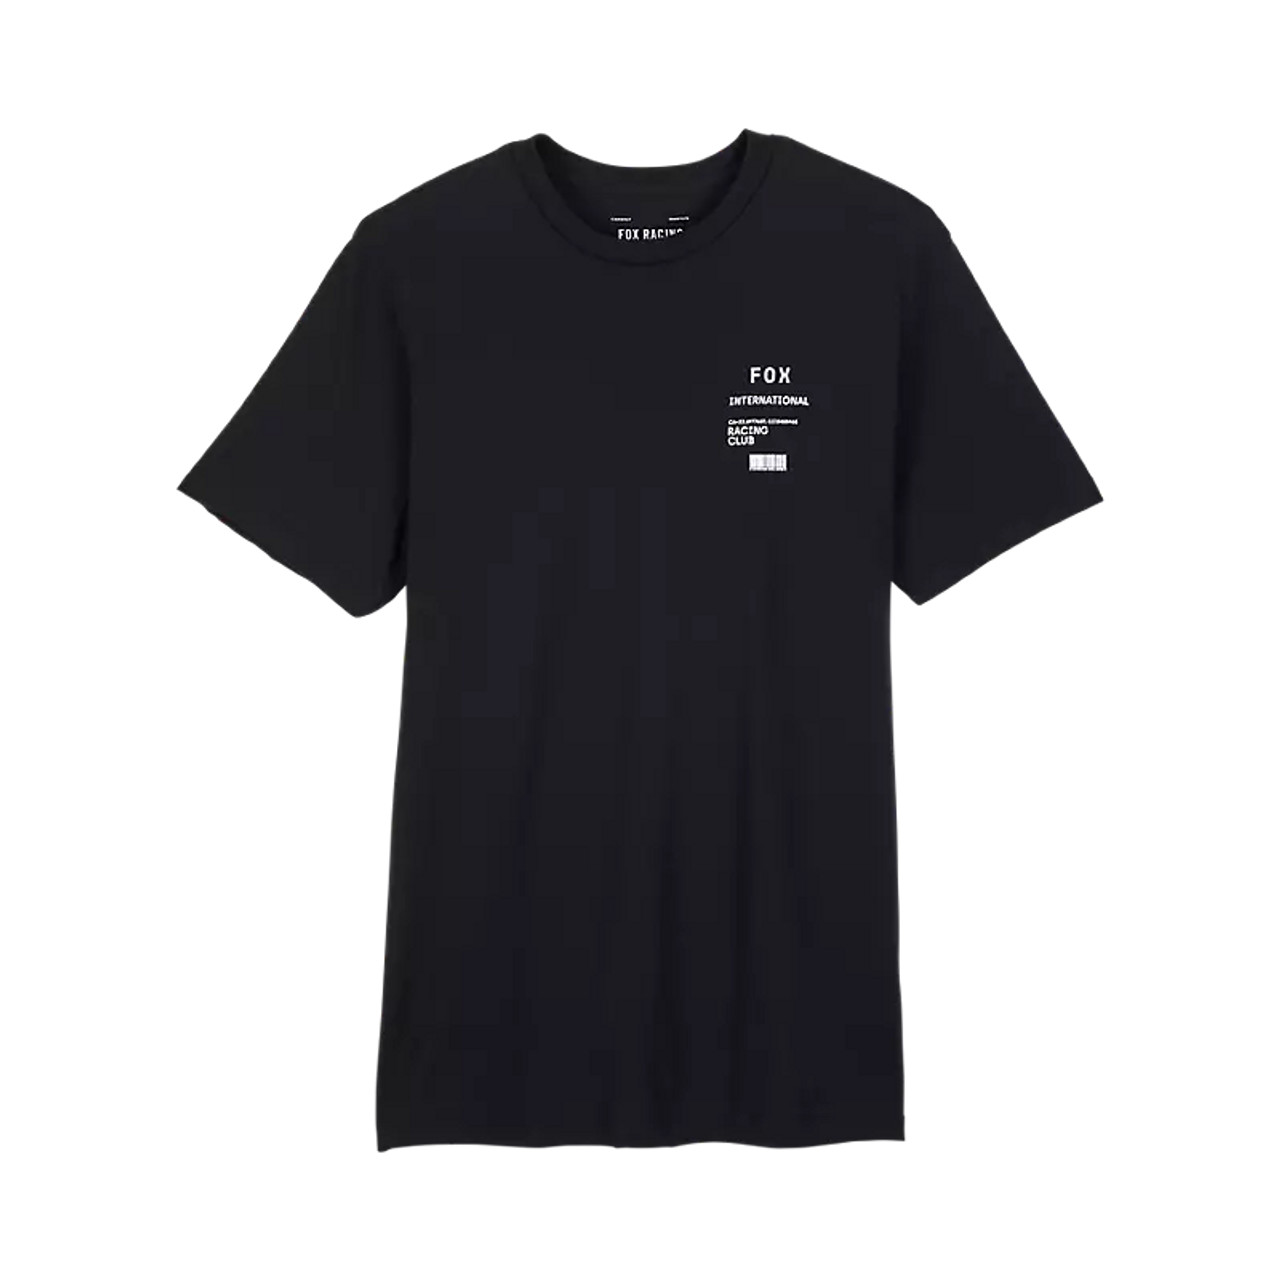 Fox Racing Men's Independence Premium Shirts,2X-Large,Black